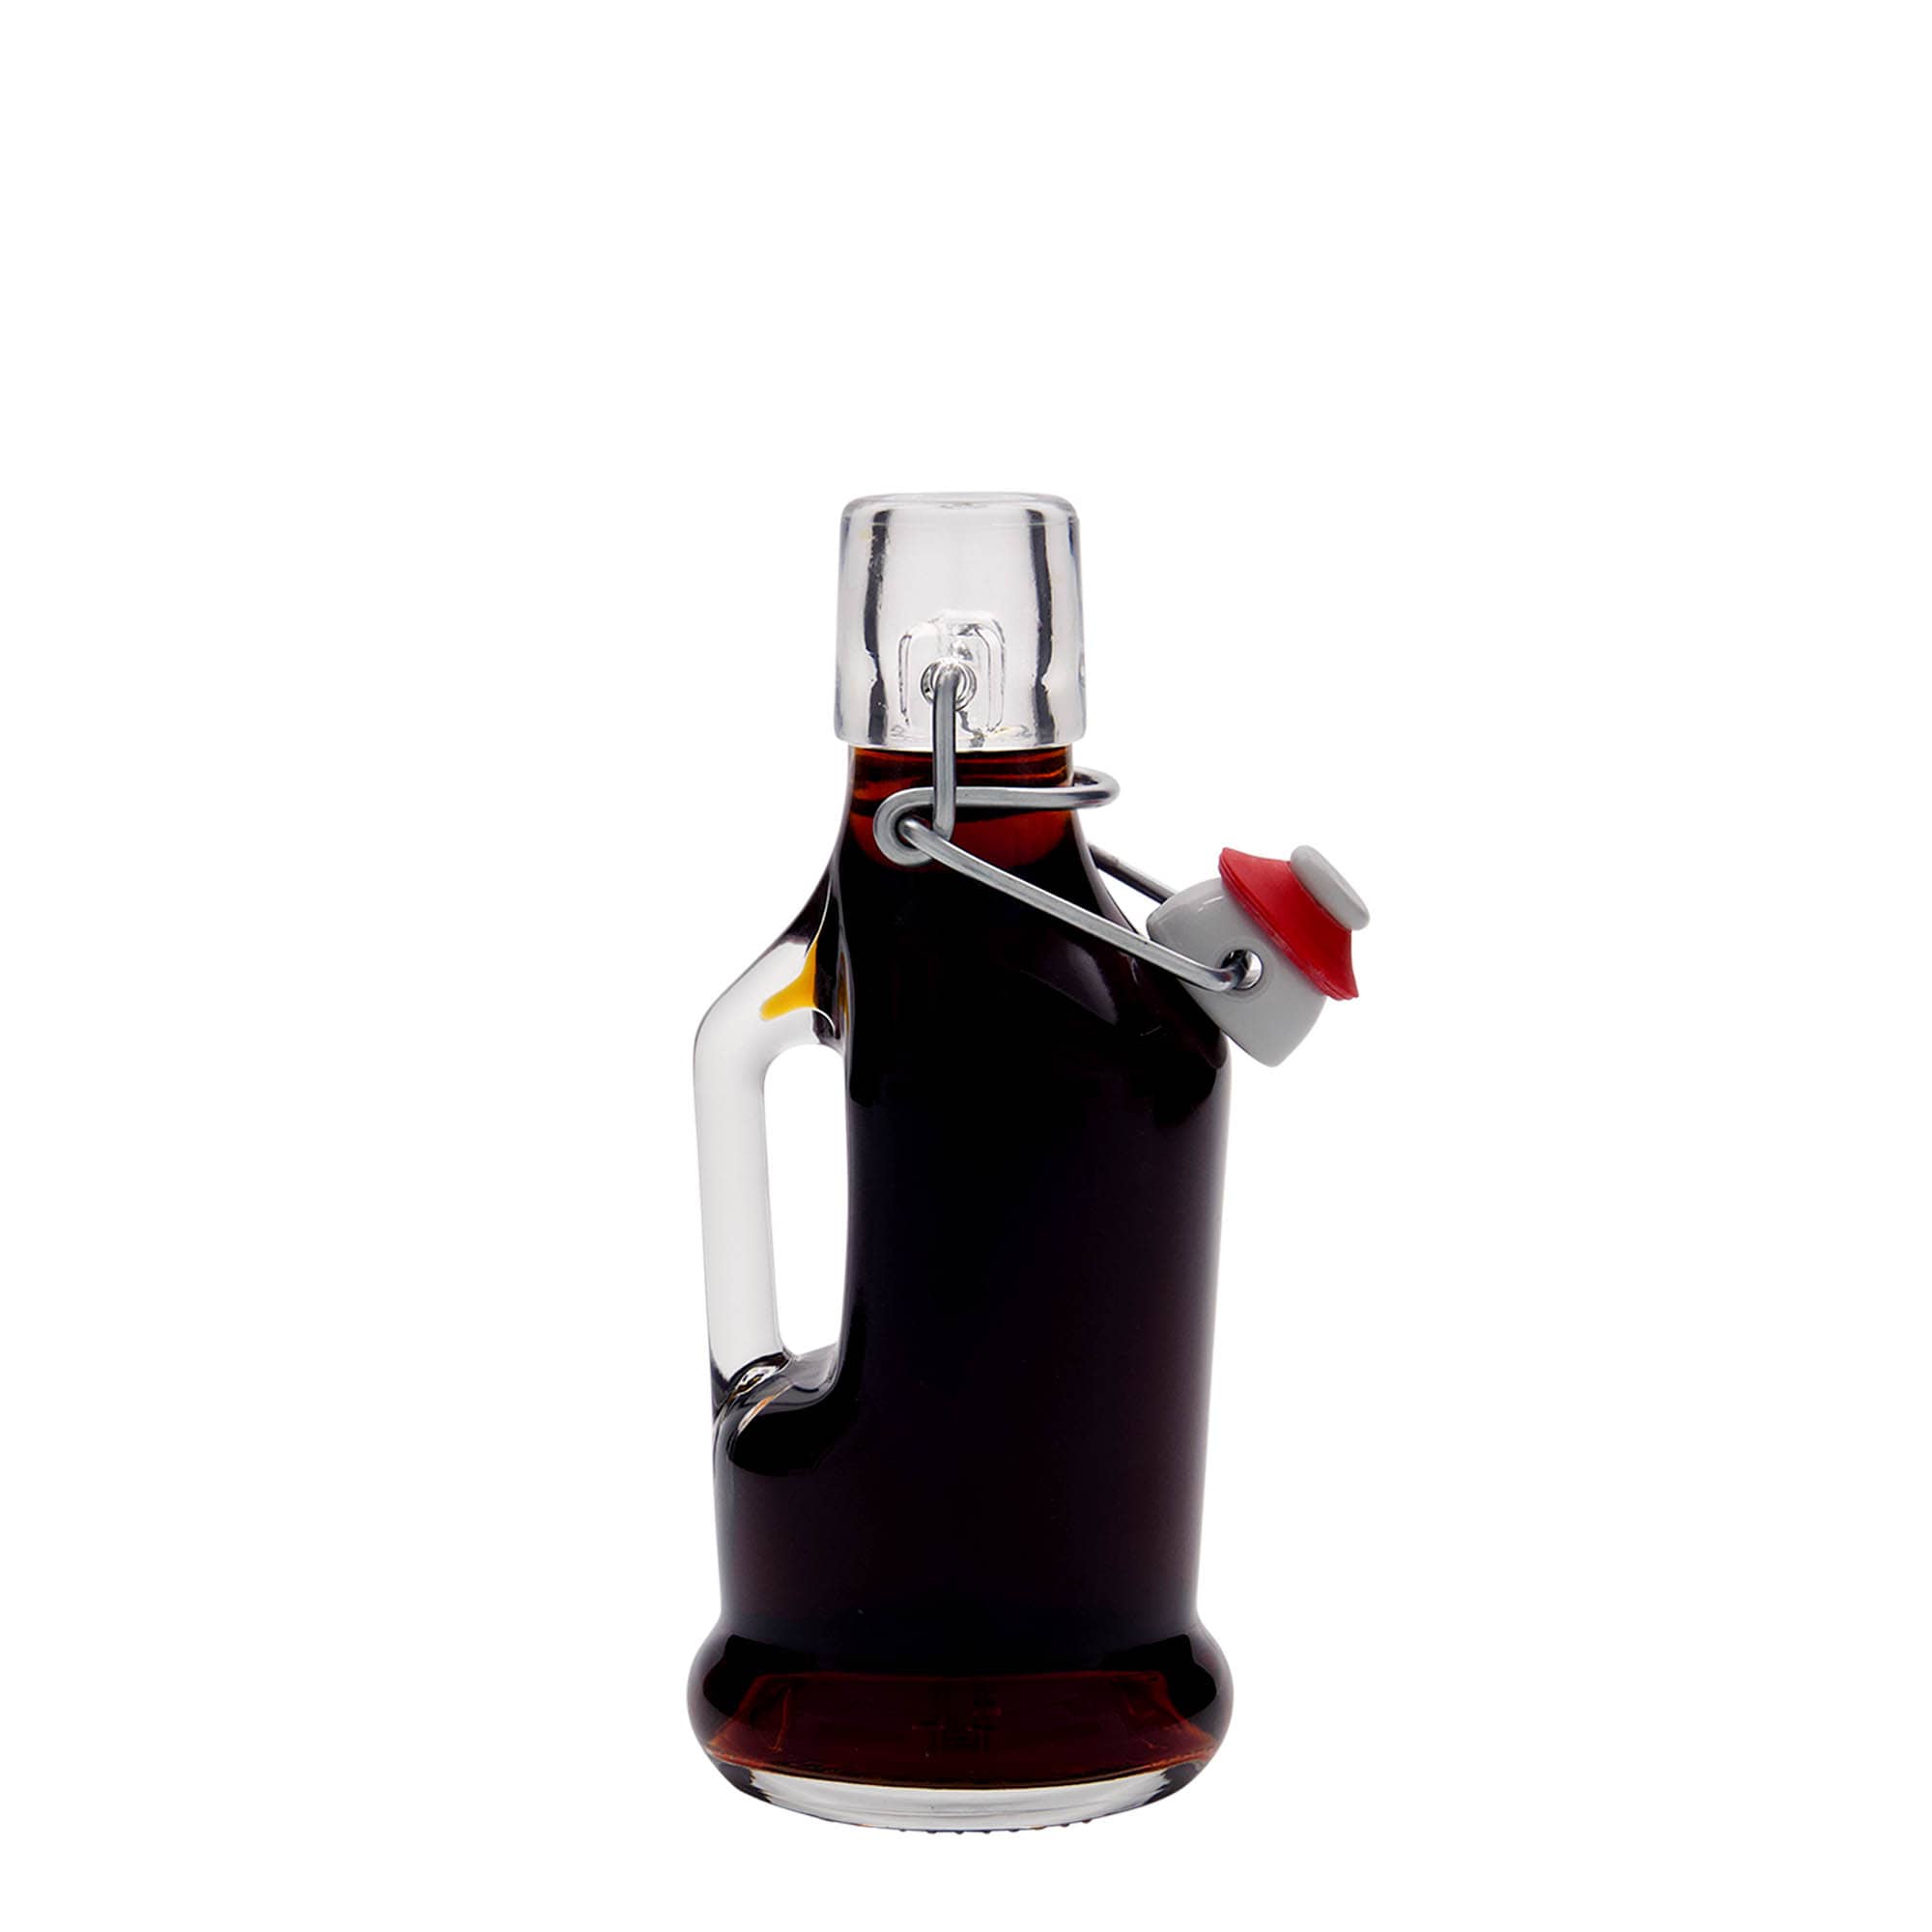 200 ml glass bottle 'Classica', closure: swing top